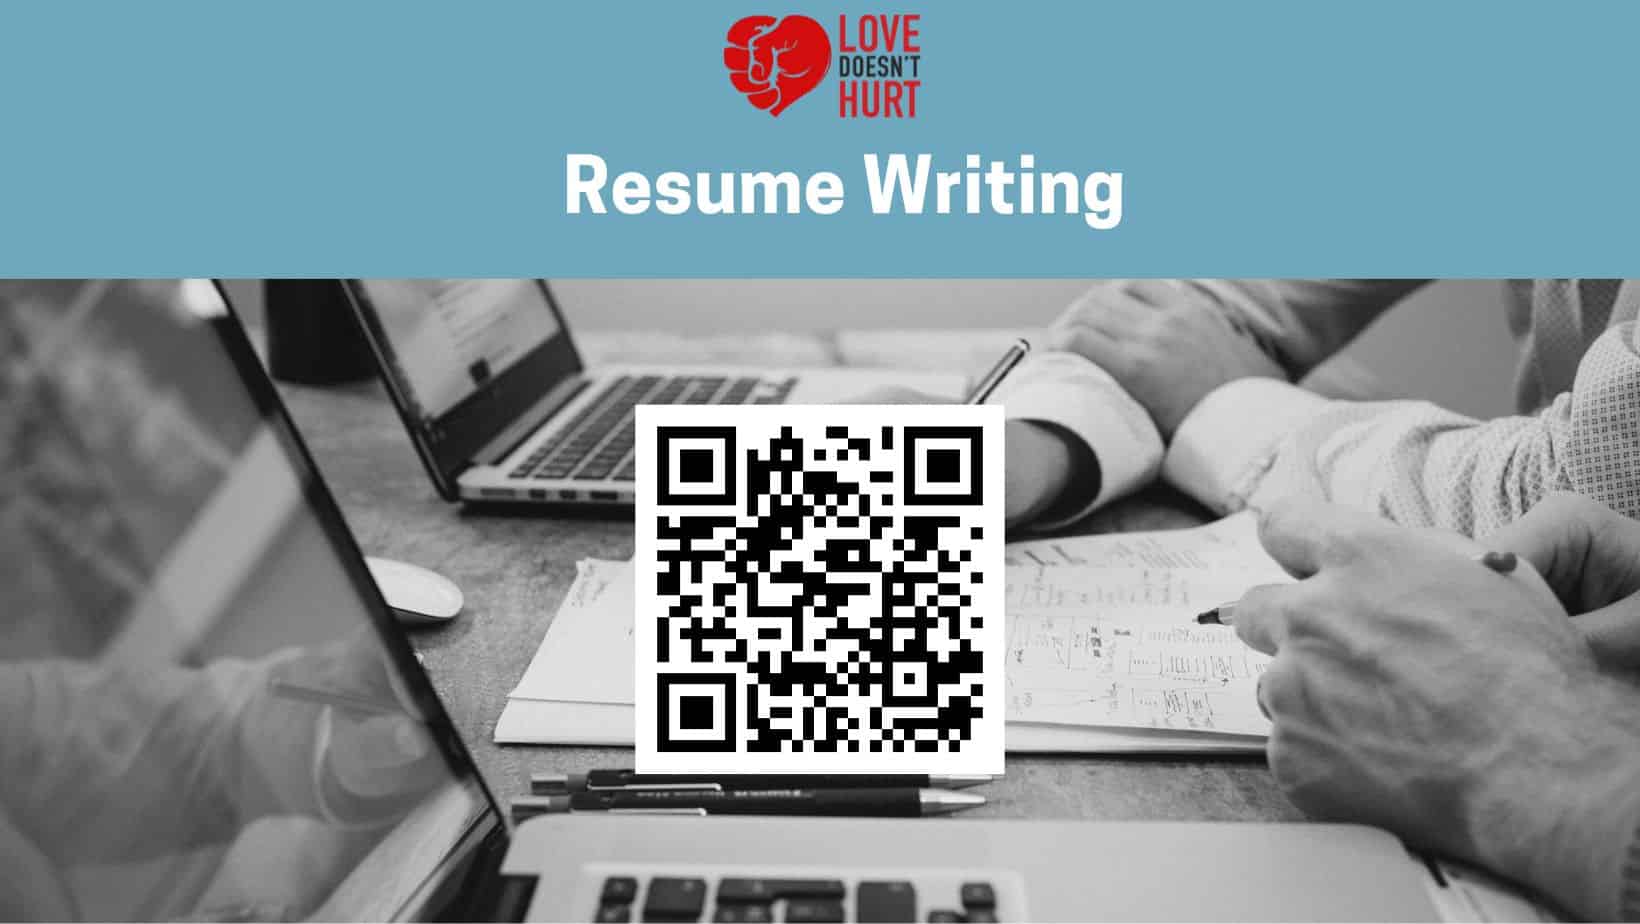 Resume Writing Resume Writing Workshop Facebook Cover